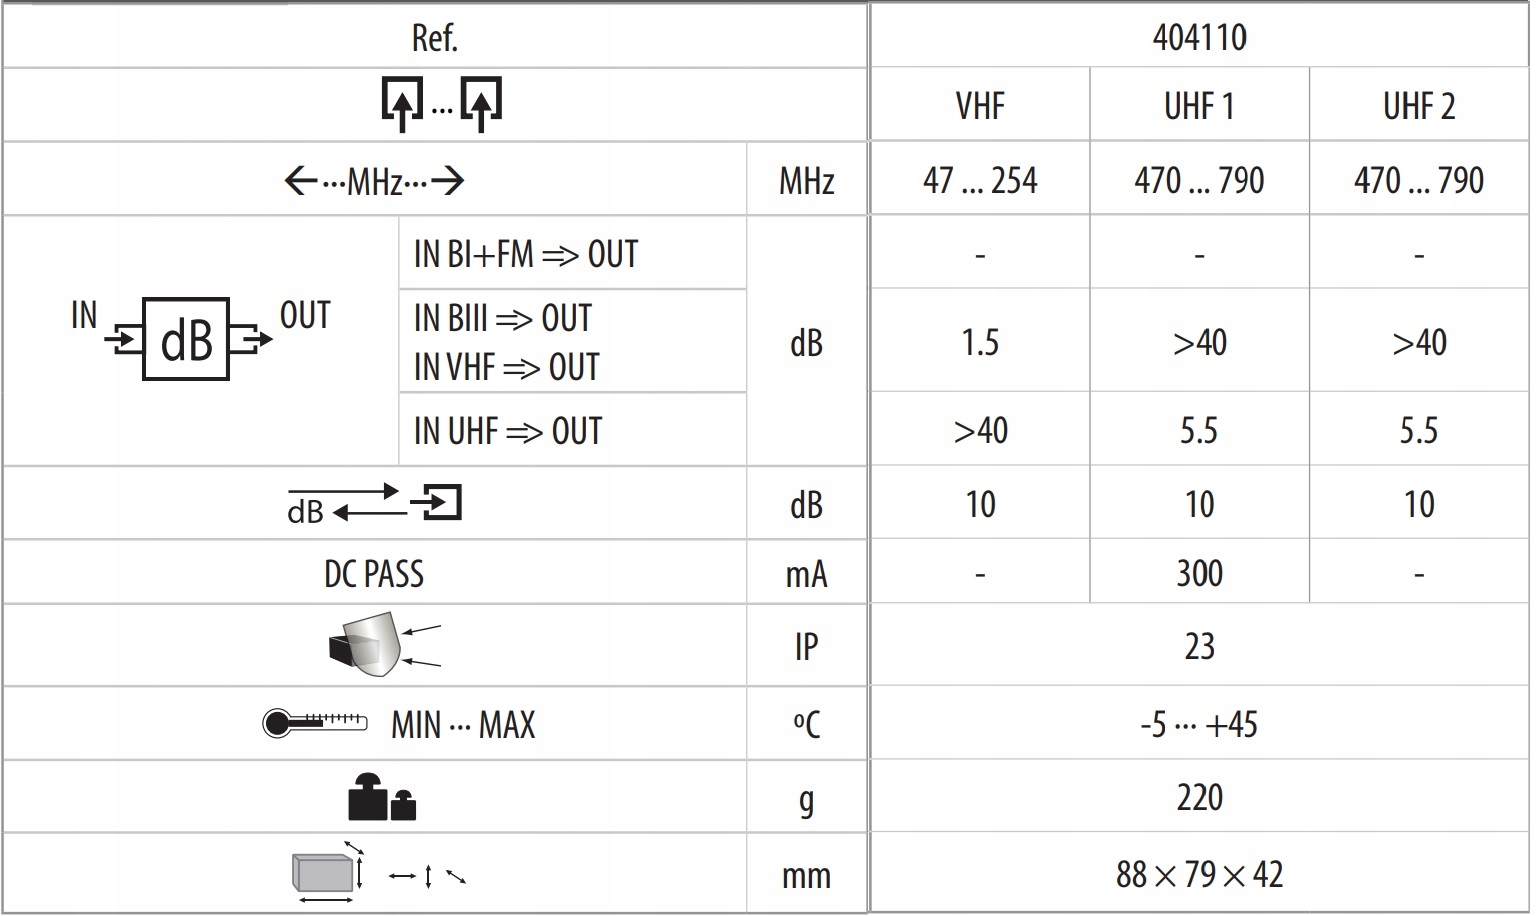 Sumator / Zwrotnica z Televes VHF-UHF[dc]-UHF 4041 Waga produktu z opakowaniem jednostkowym 0.4 kg